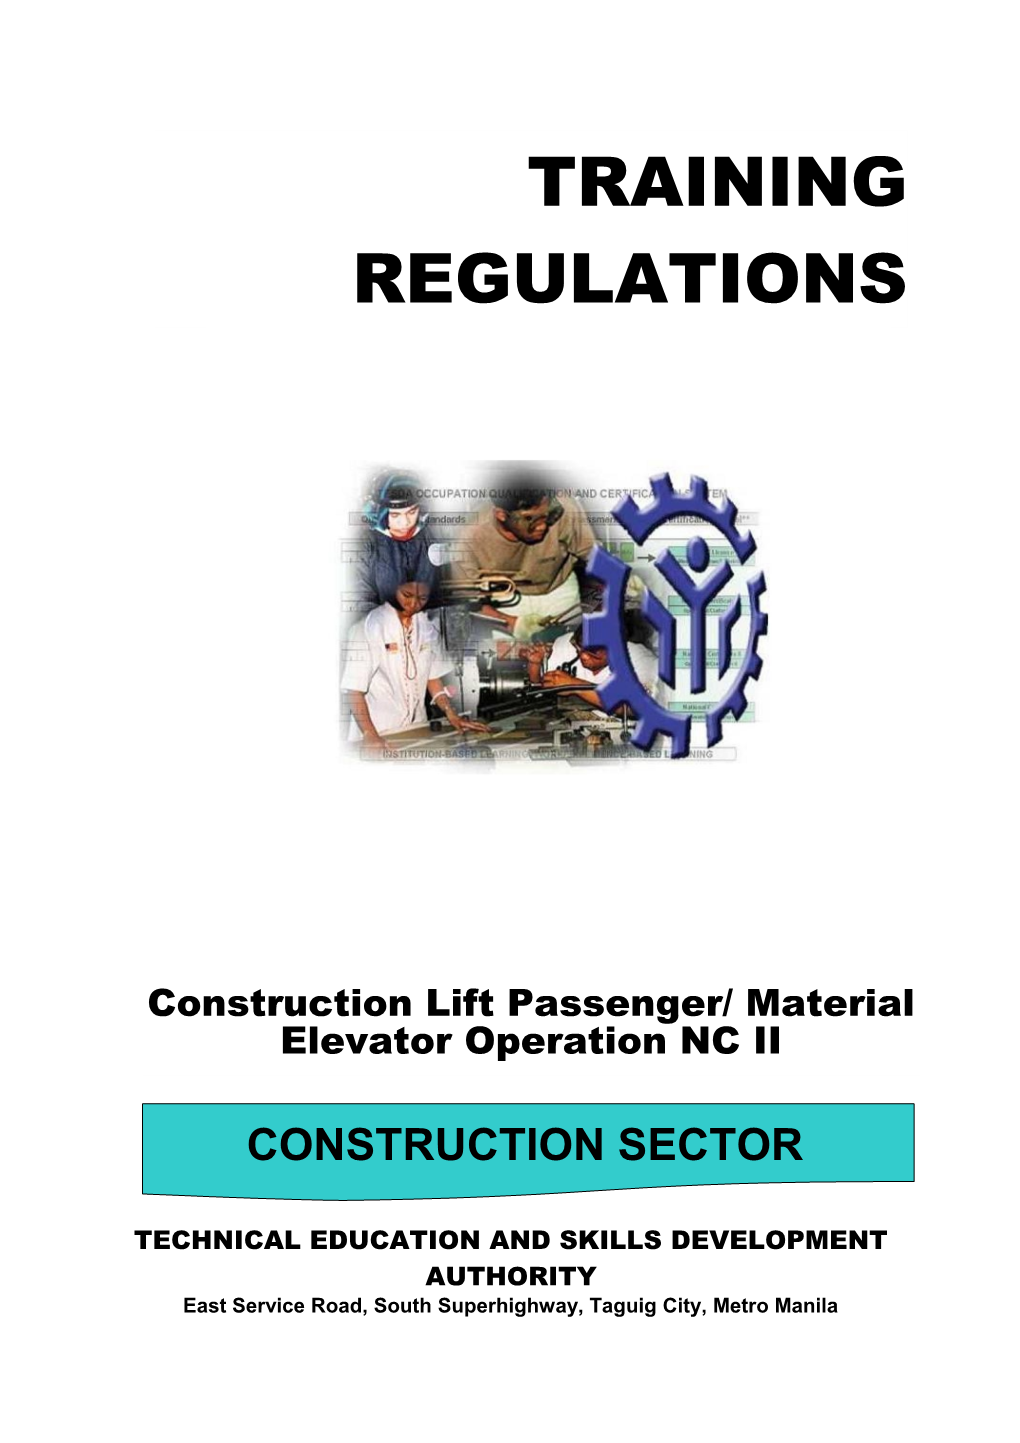 Construction Lift Passenger/Material Elevator Operation NC II